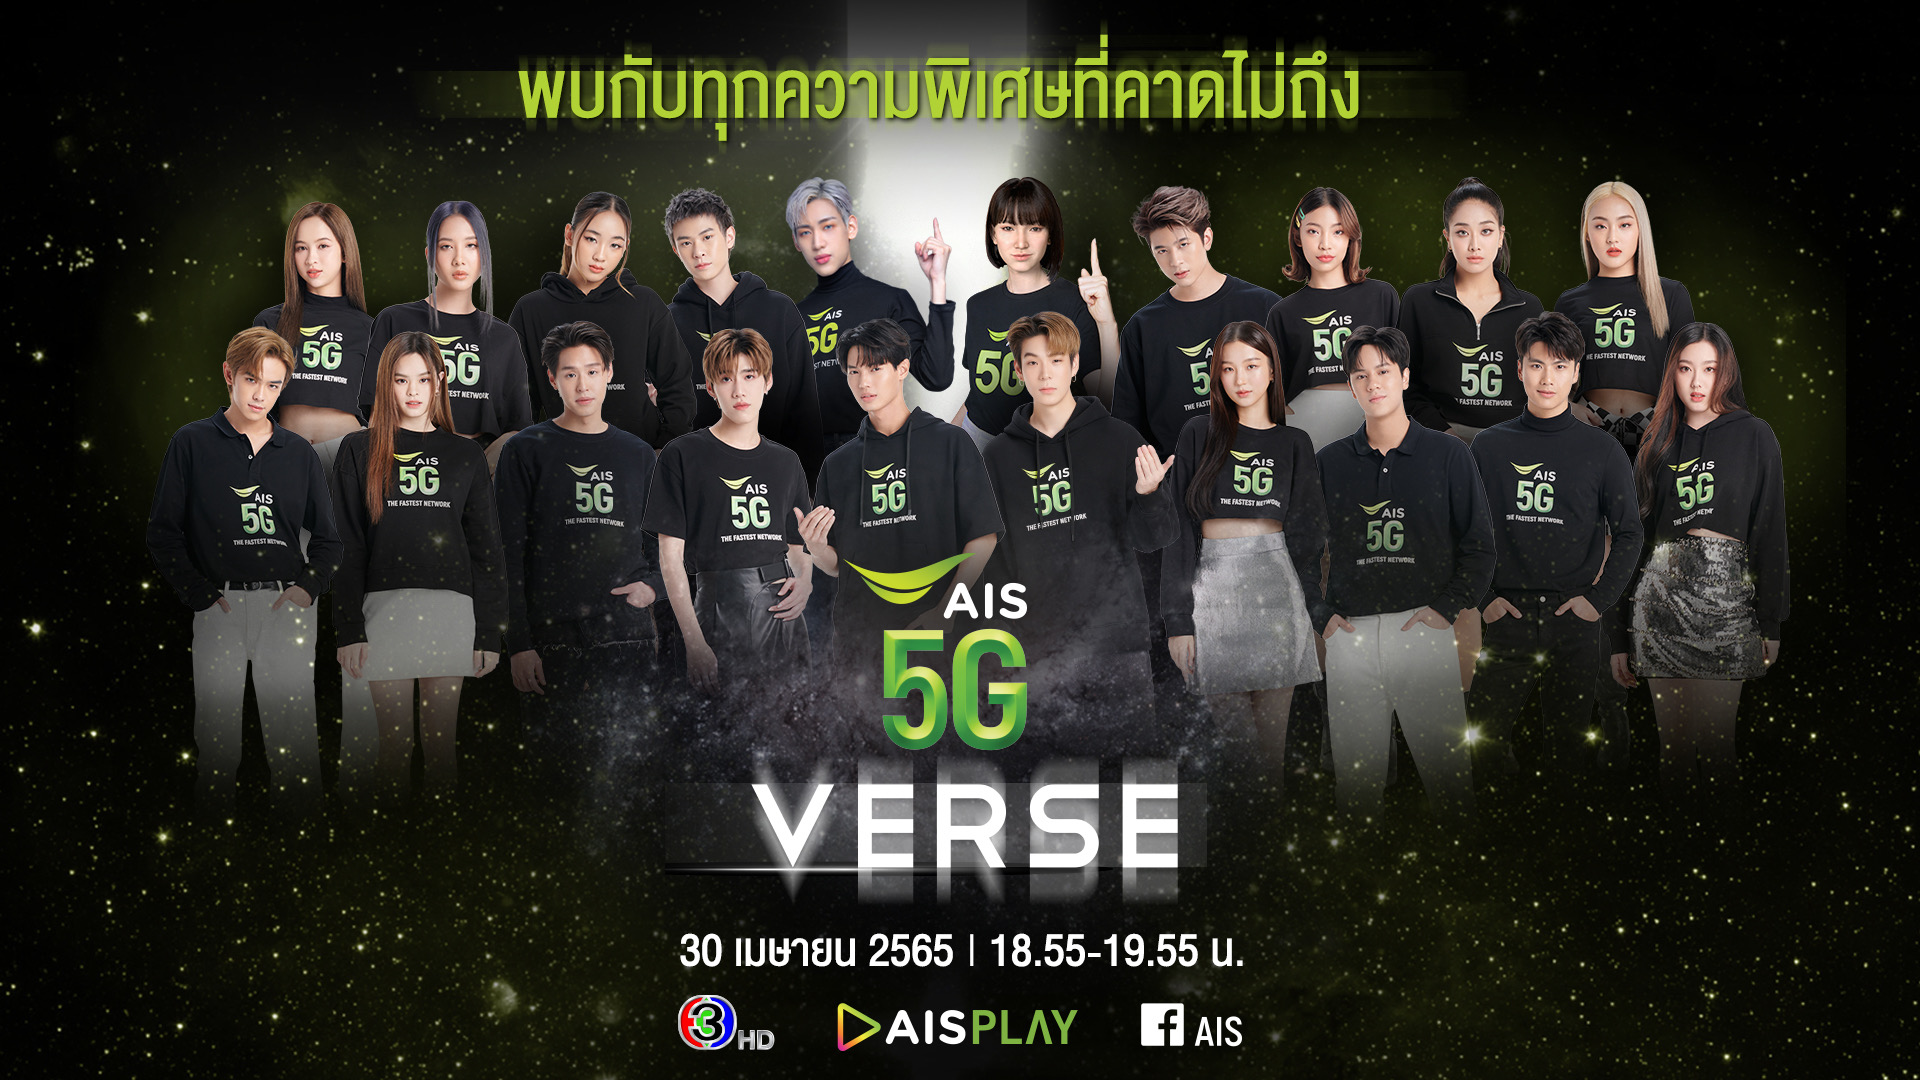 AIS 5G เตรียมพาคนไทยบุกโลก Metaverse ครั้งแรก กับรายการพิเศษ AIS5GVERSE  ขอบคุณลูกค้า พร้อมจัดเต็มสิทธิพิเศษสุดเซอร์ไพรส์เกินคาด เล่นใหญ่ที่สุดในรอบ 31 ปี พบกัน 30 เม.ย. นี้ ทางช่อง 3HD และ AIS PLAY 